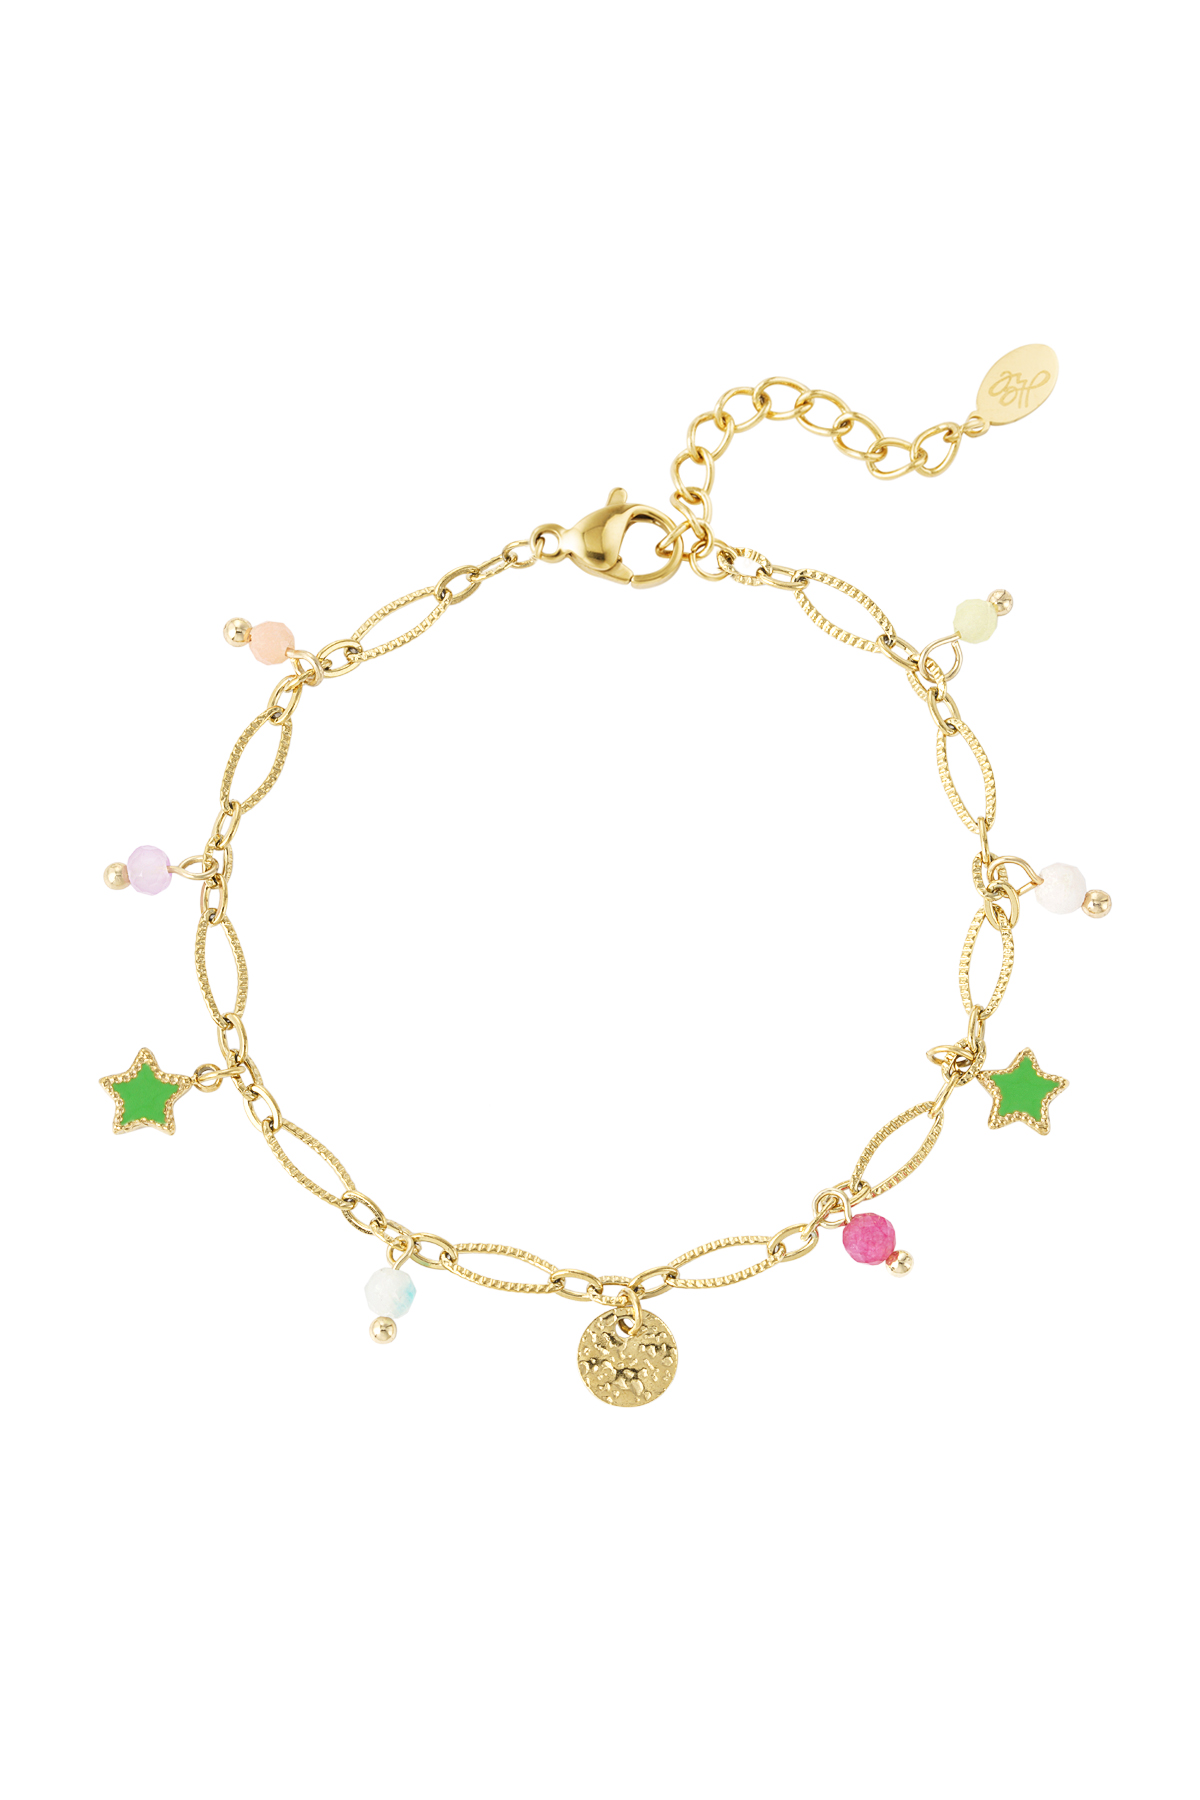 Summer rockstar charm bracelet - gold